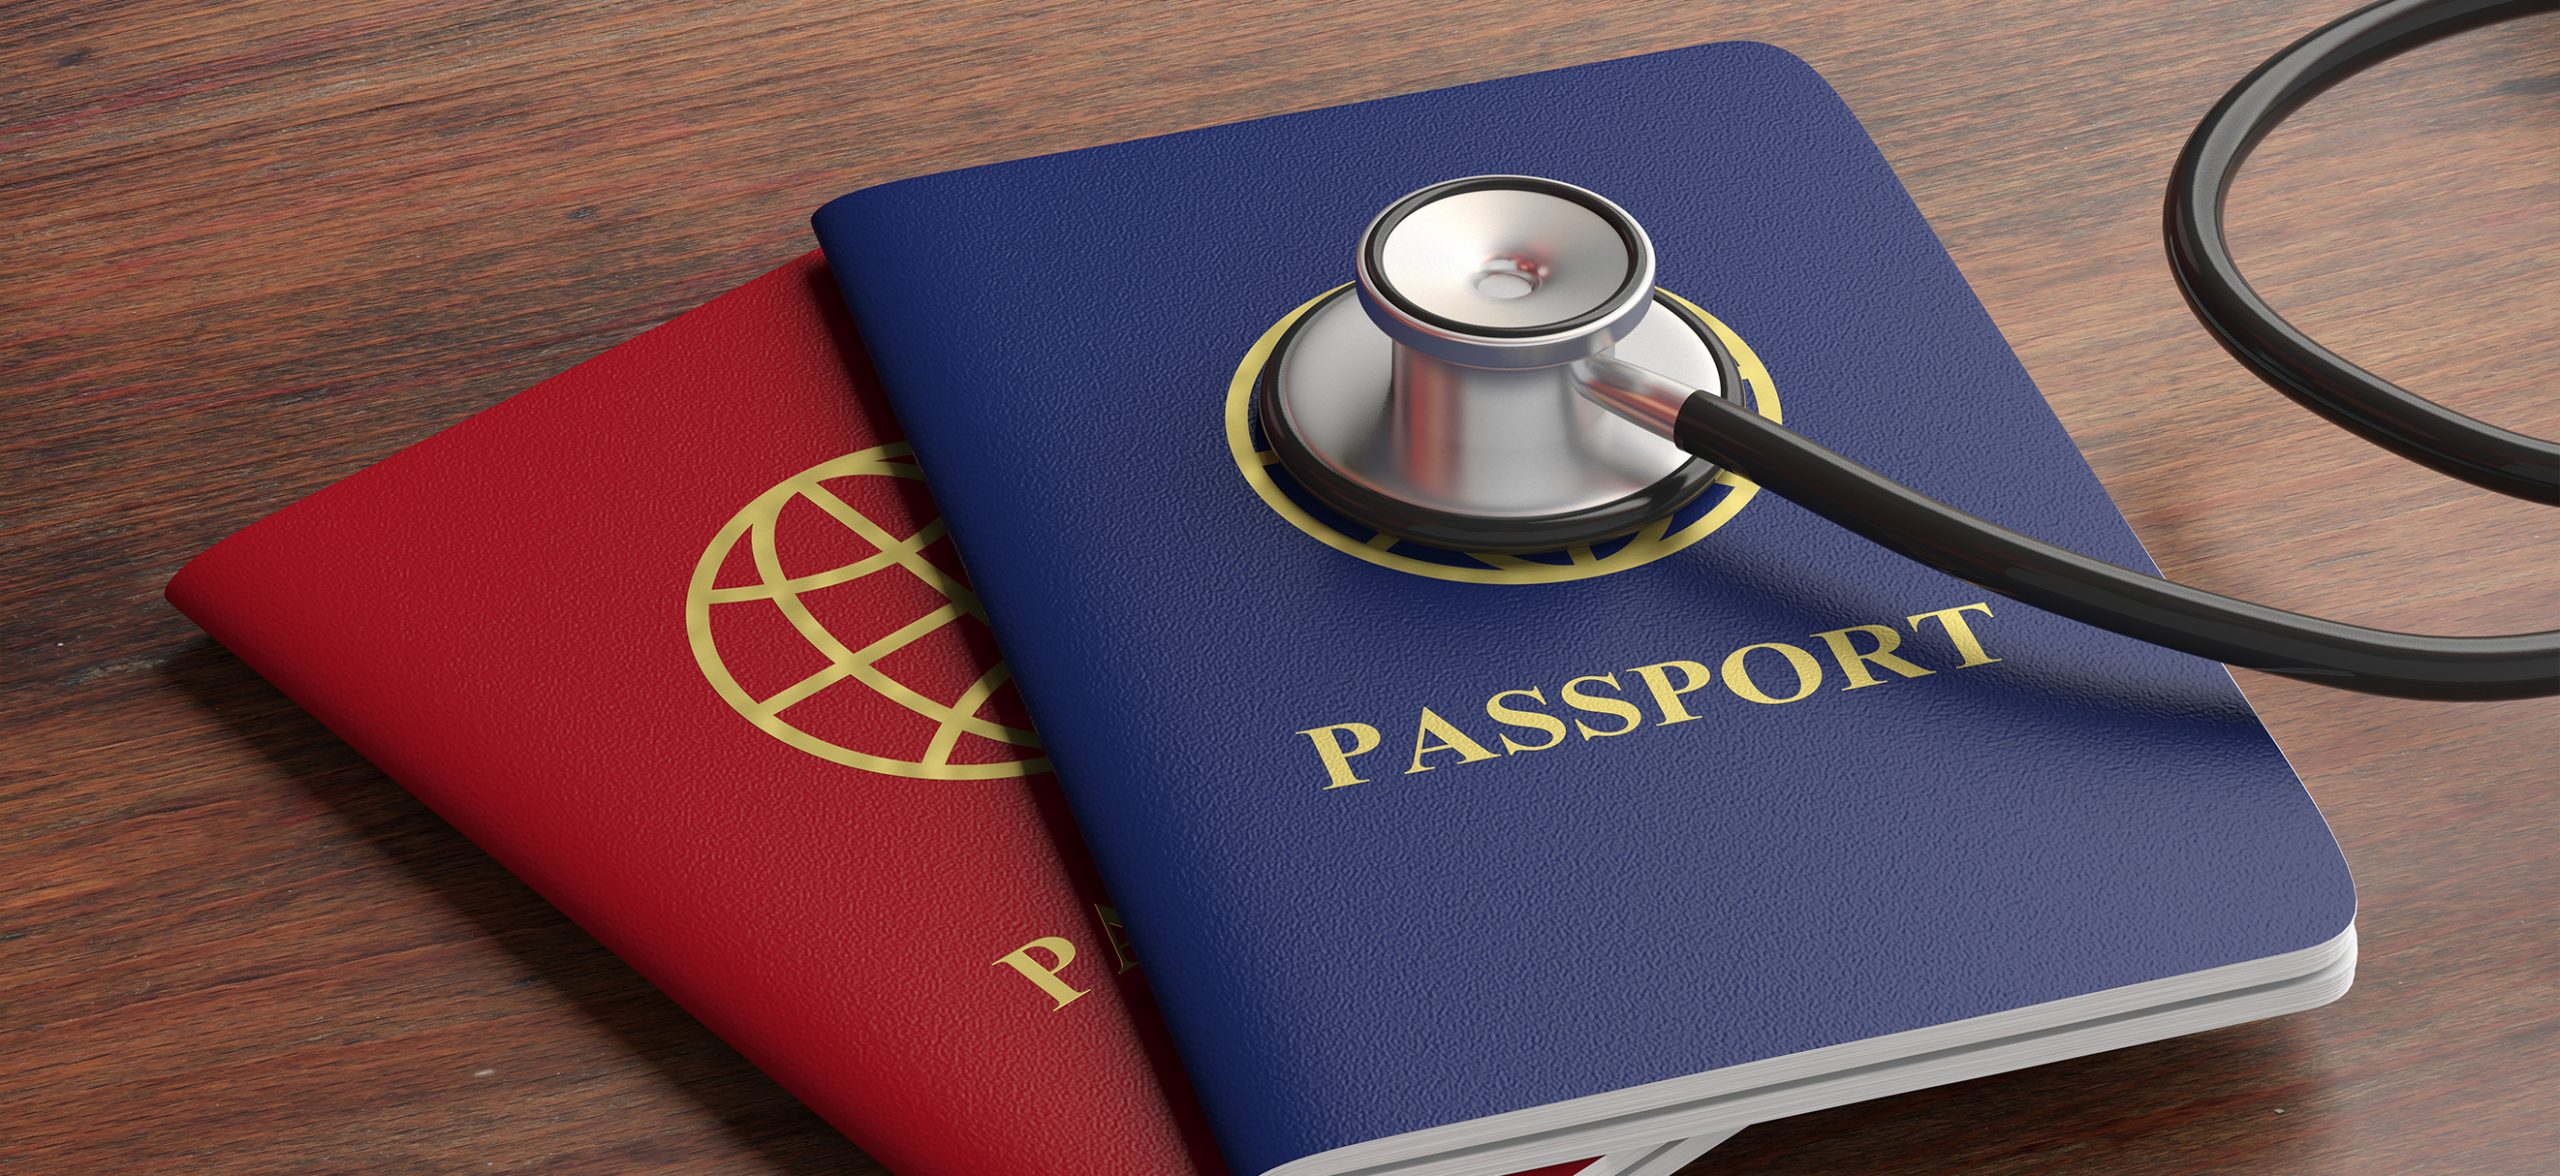 extending tourist visa on medical grounds